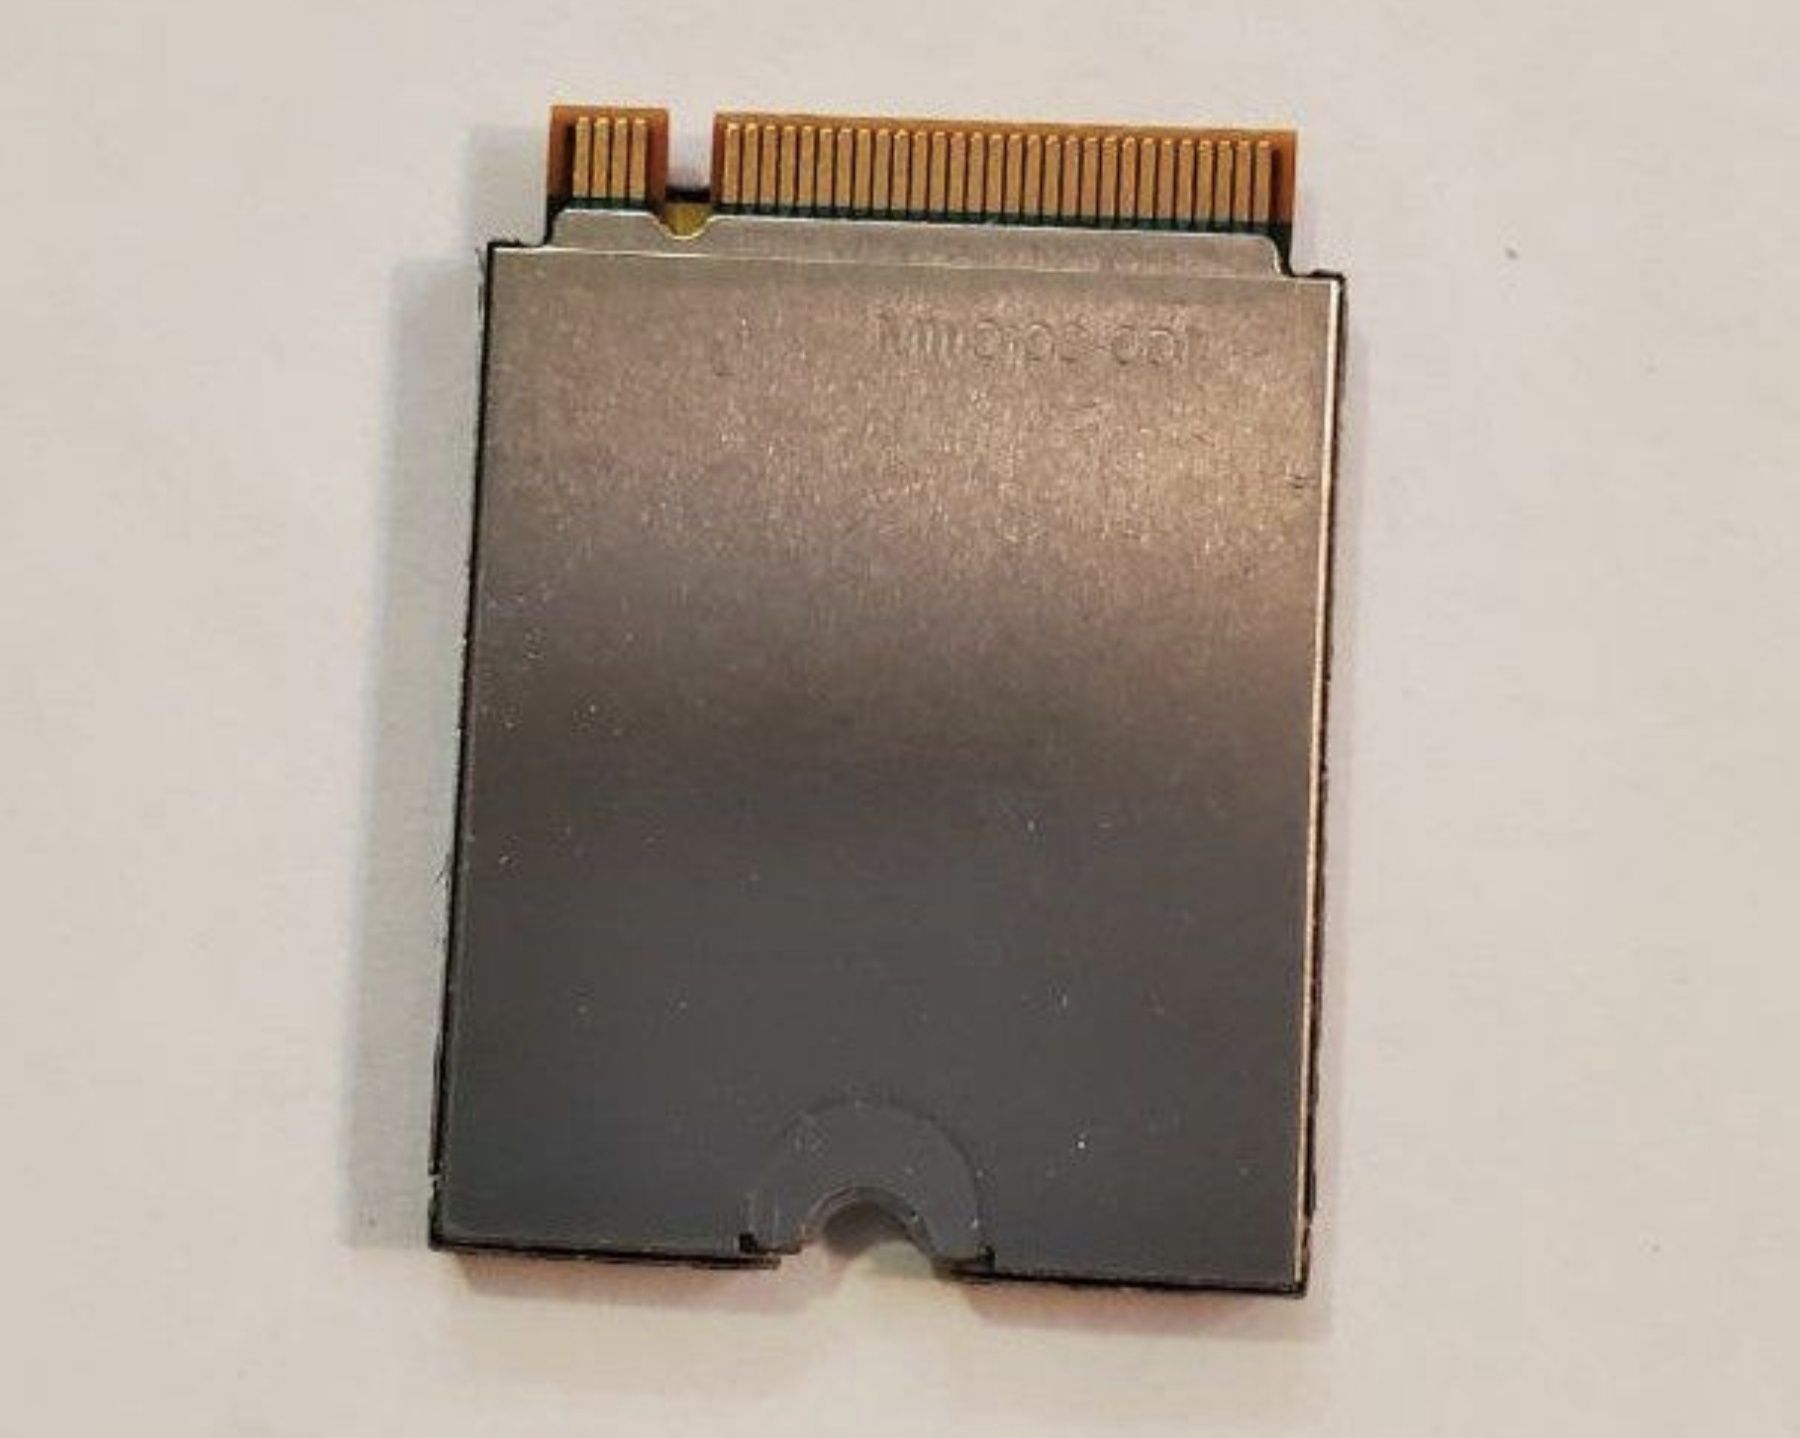 SSD Накопитель Microsoft Model 1911. 256GB.
256 ГБ. Surfa